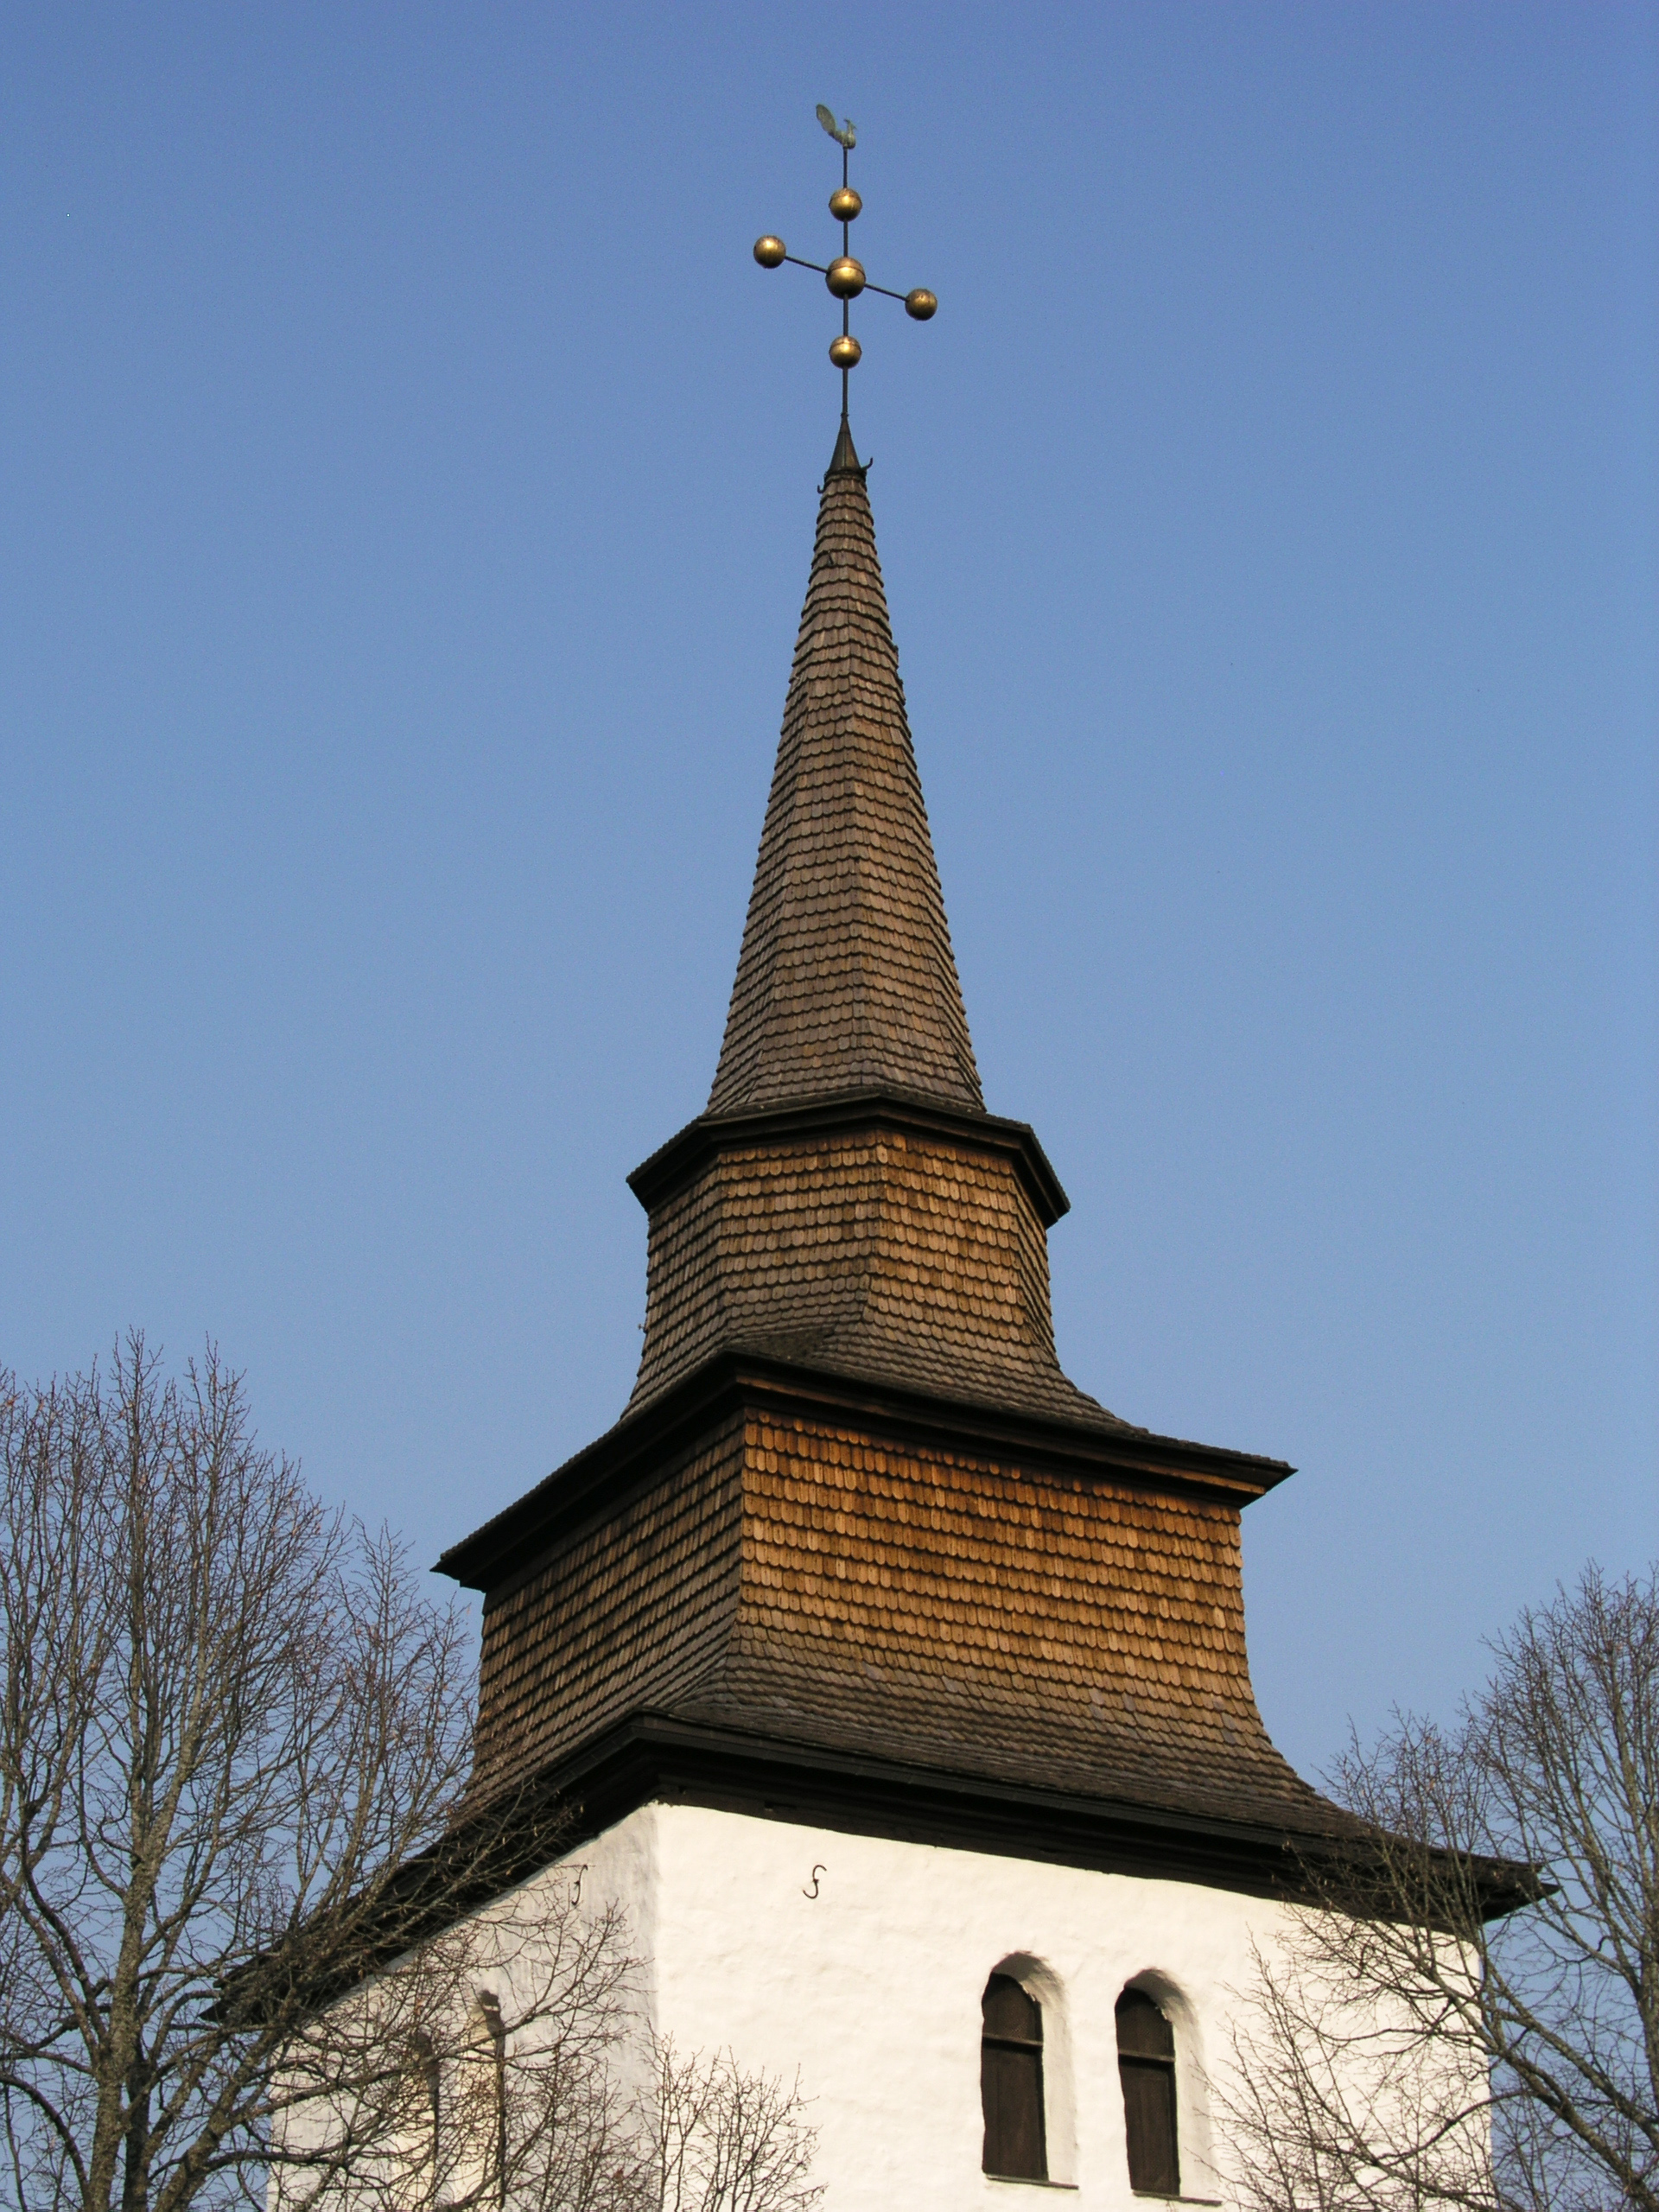 File:Alga kyrka church steeple.jpg - Wikimedia Commons